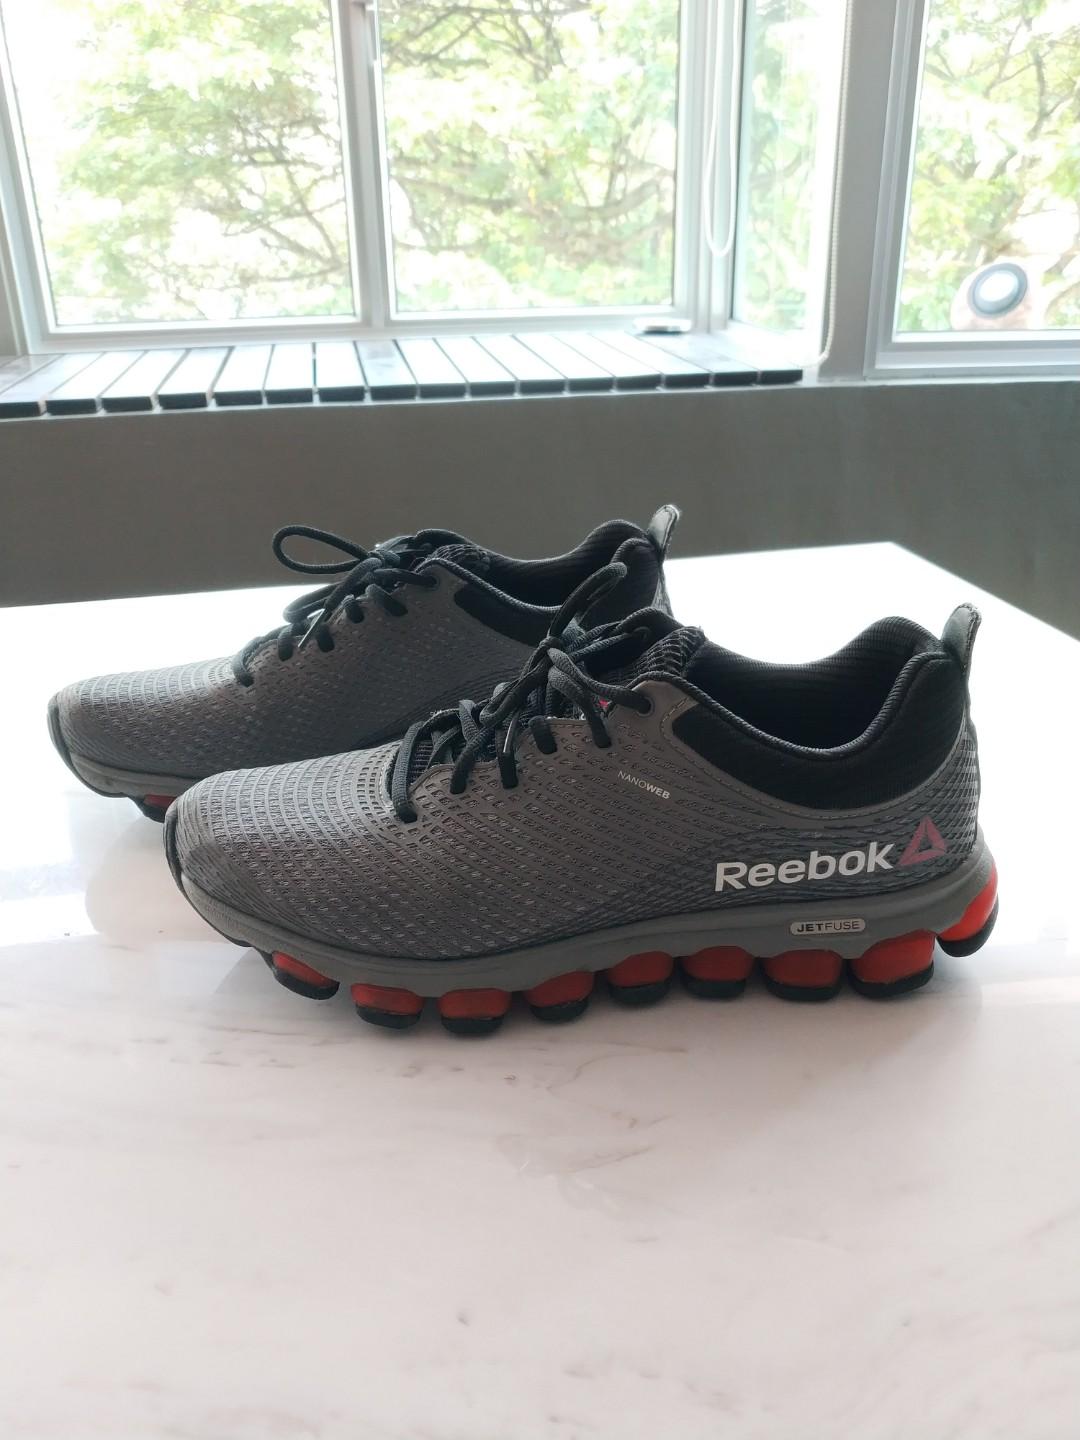 reebok shoes jetfuse price